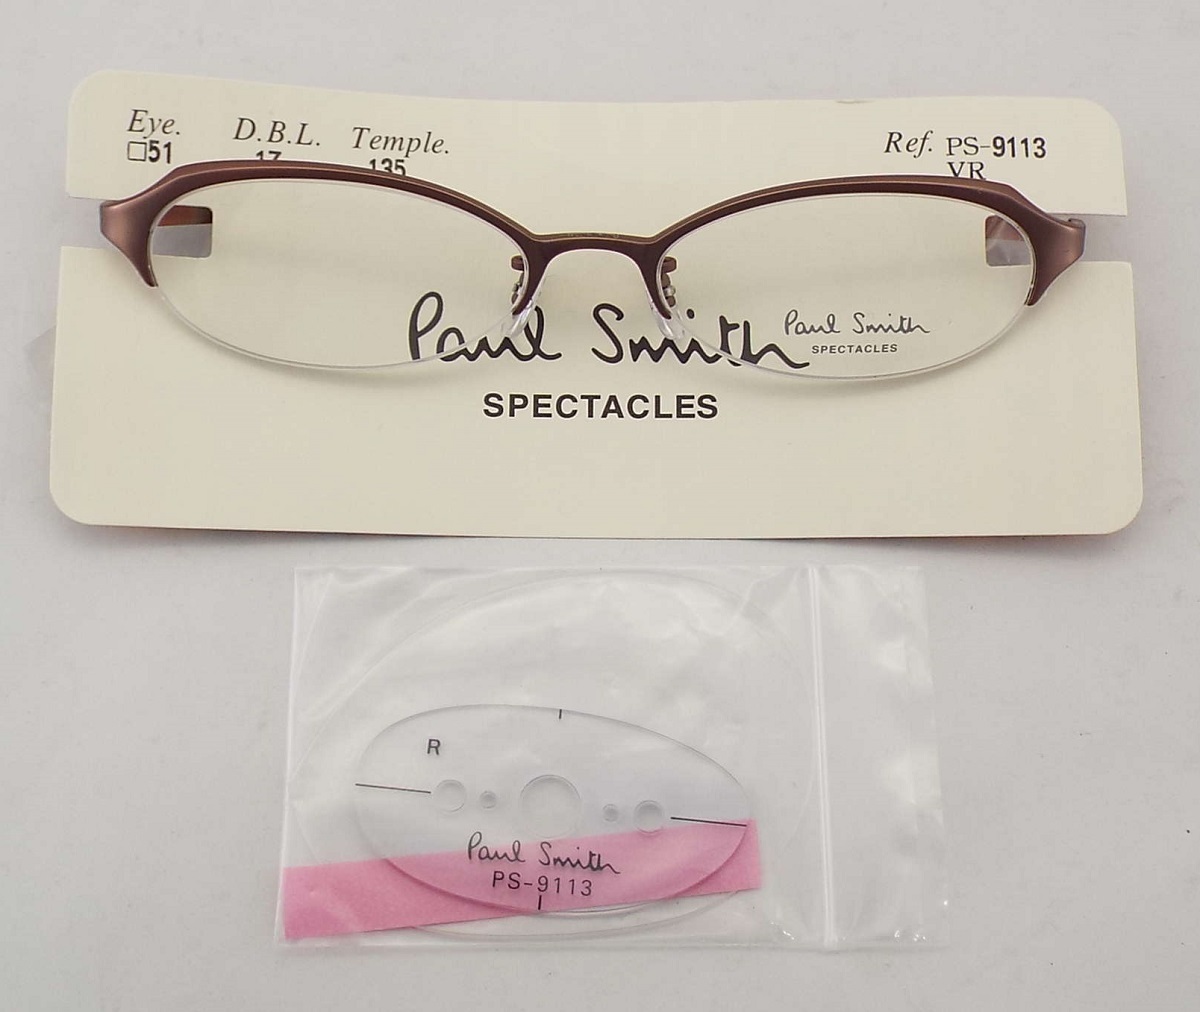 T2358 未使用 Paul Smith Spectacles ポール スミス スペクタクルズ 眼鏡フレーム メガネ 伊達眼鏡レンズ Ps 9113 Vr 51 17 135 Aletea Rs